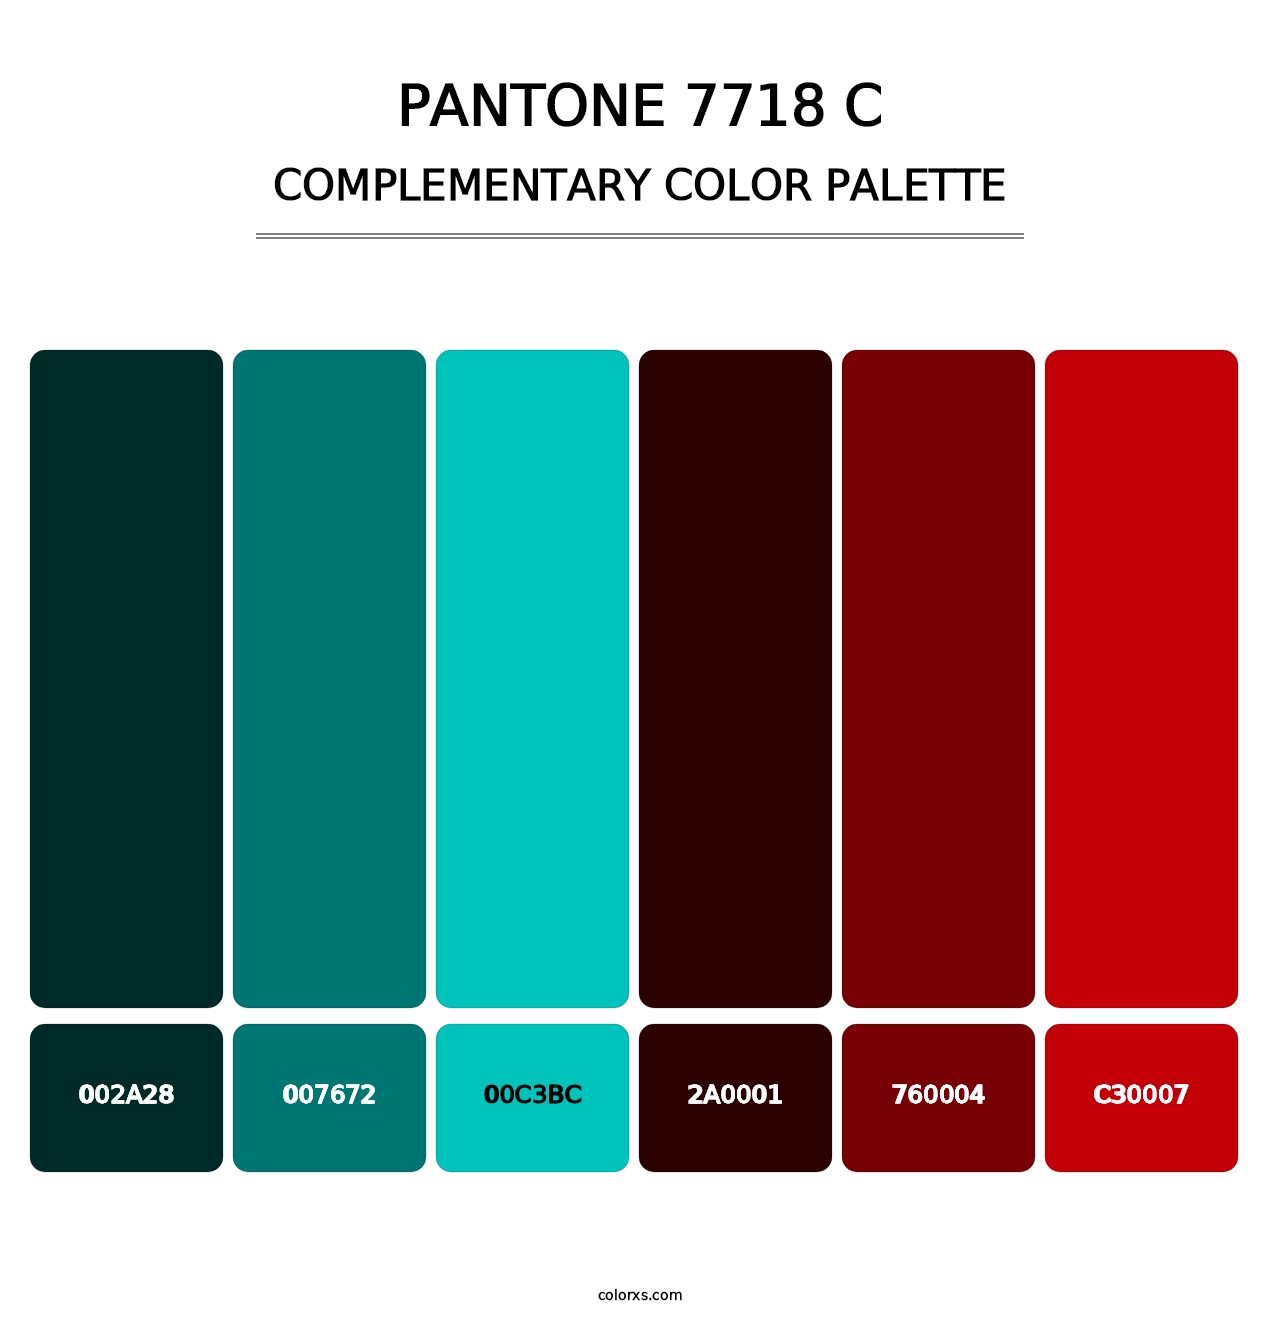 PANTONE 7718 C - Complementary Color Palette